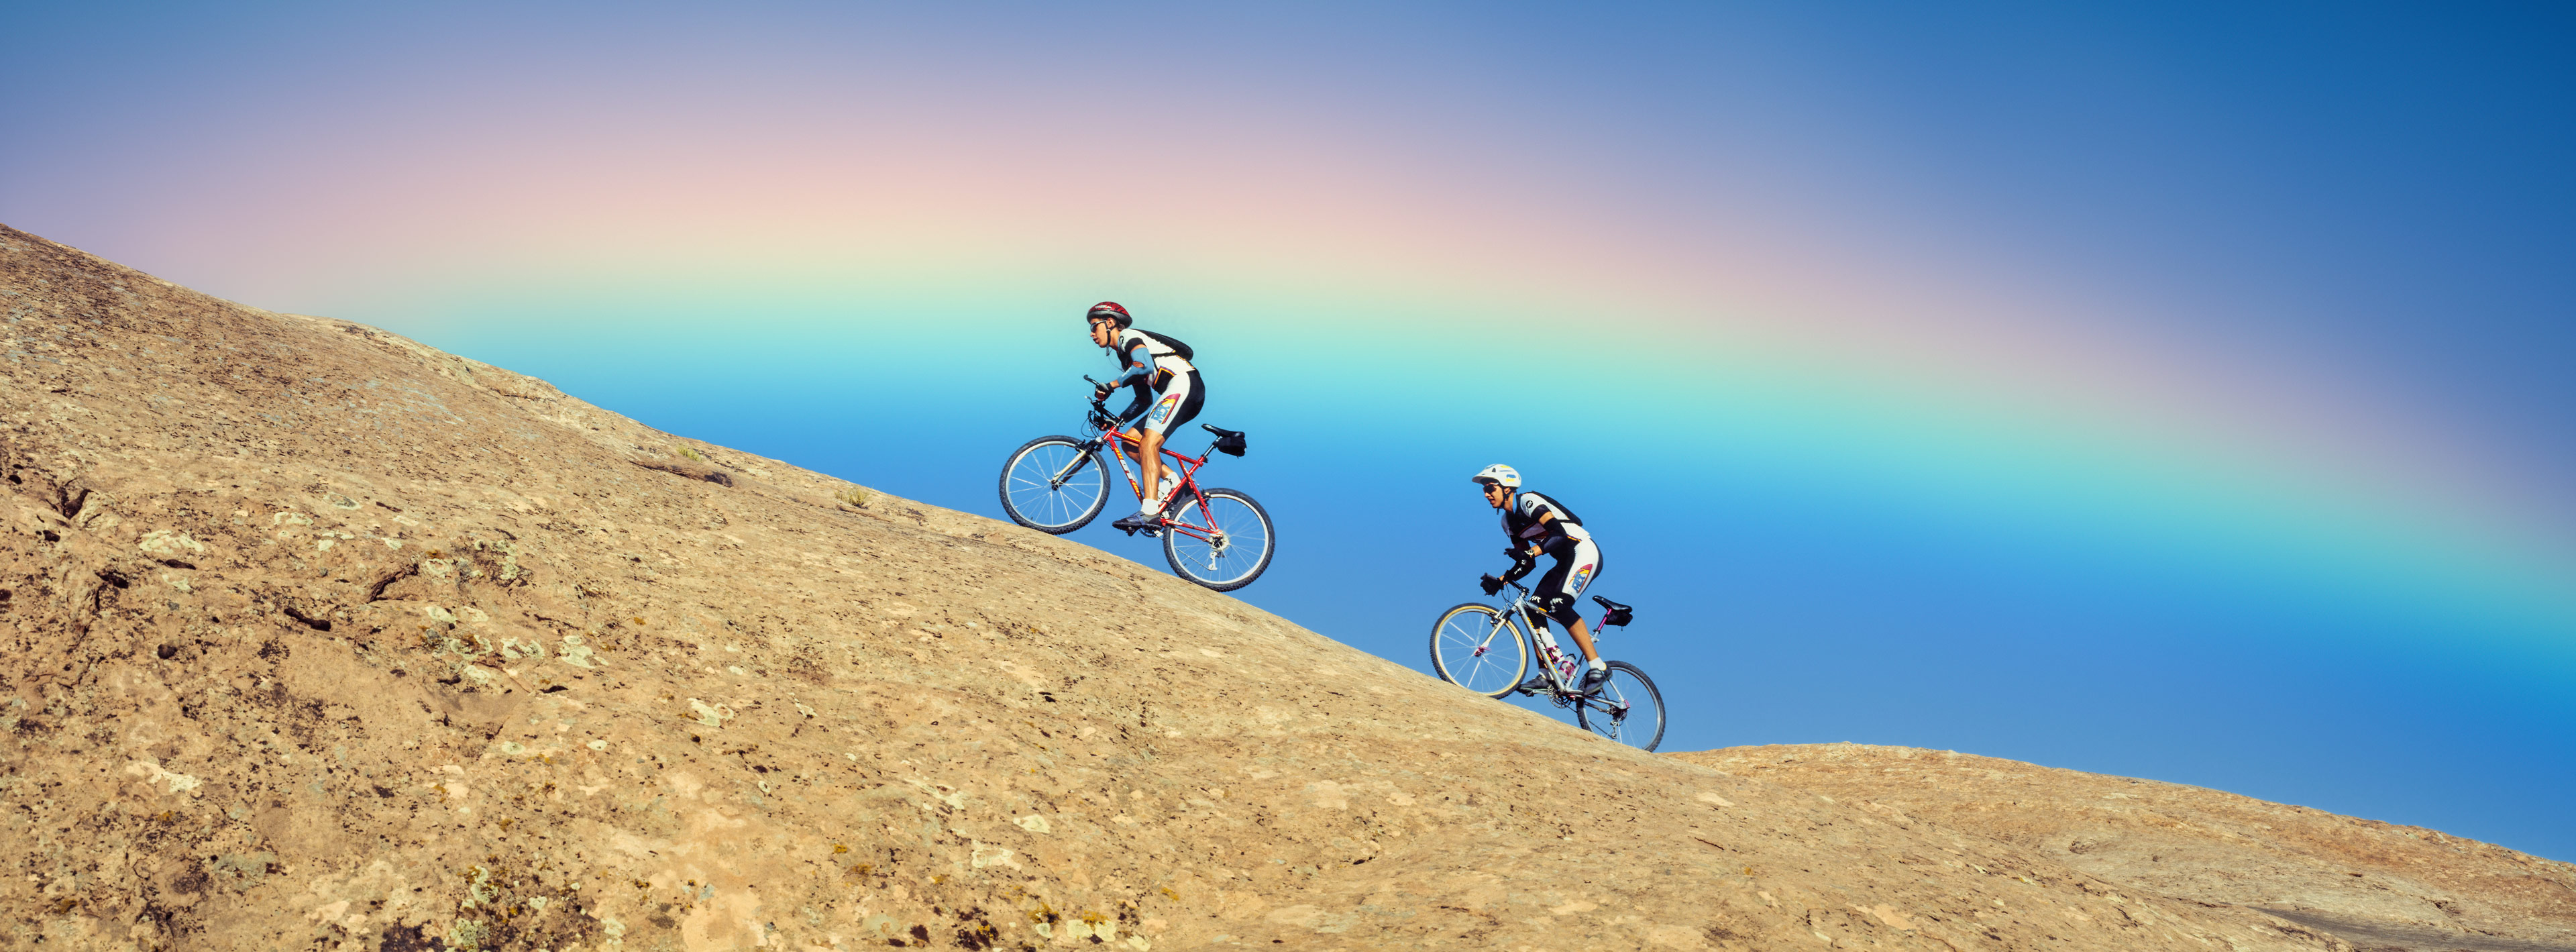 Mountain Bikers, Moab Bike Trail, Moab, Utah, USA (23699.comp)